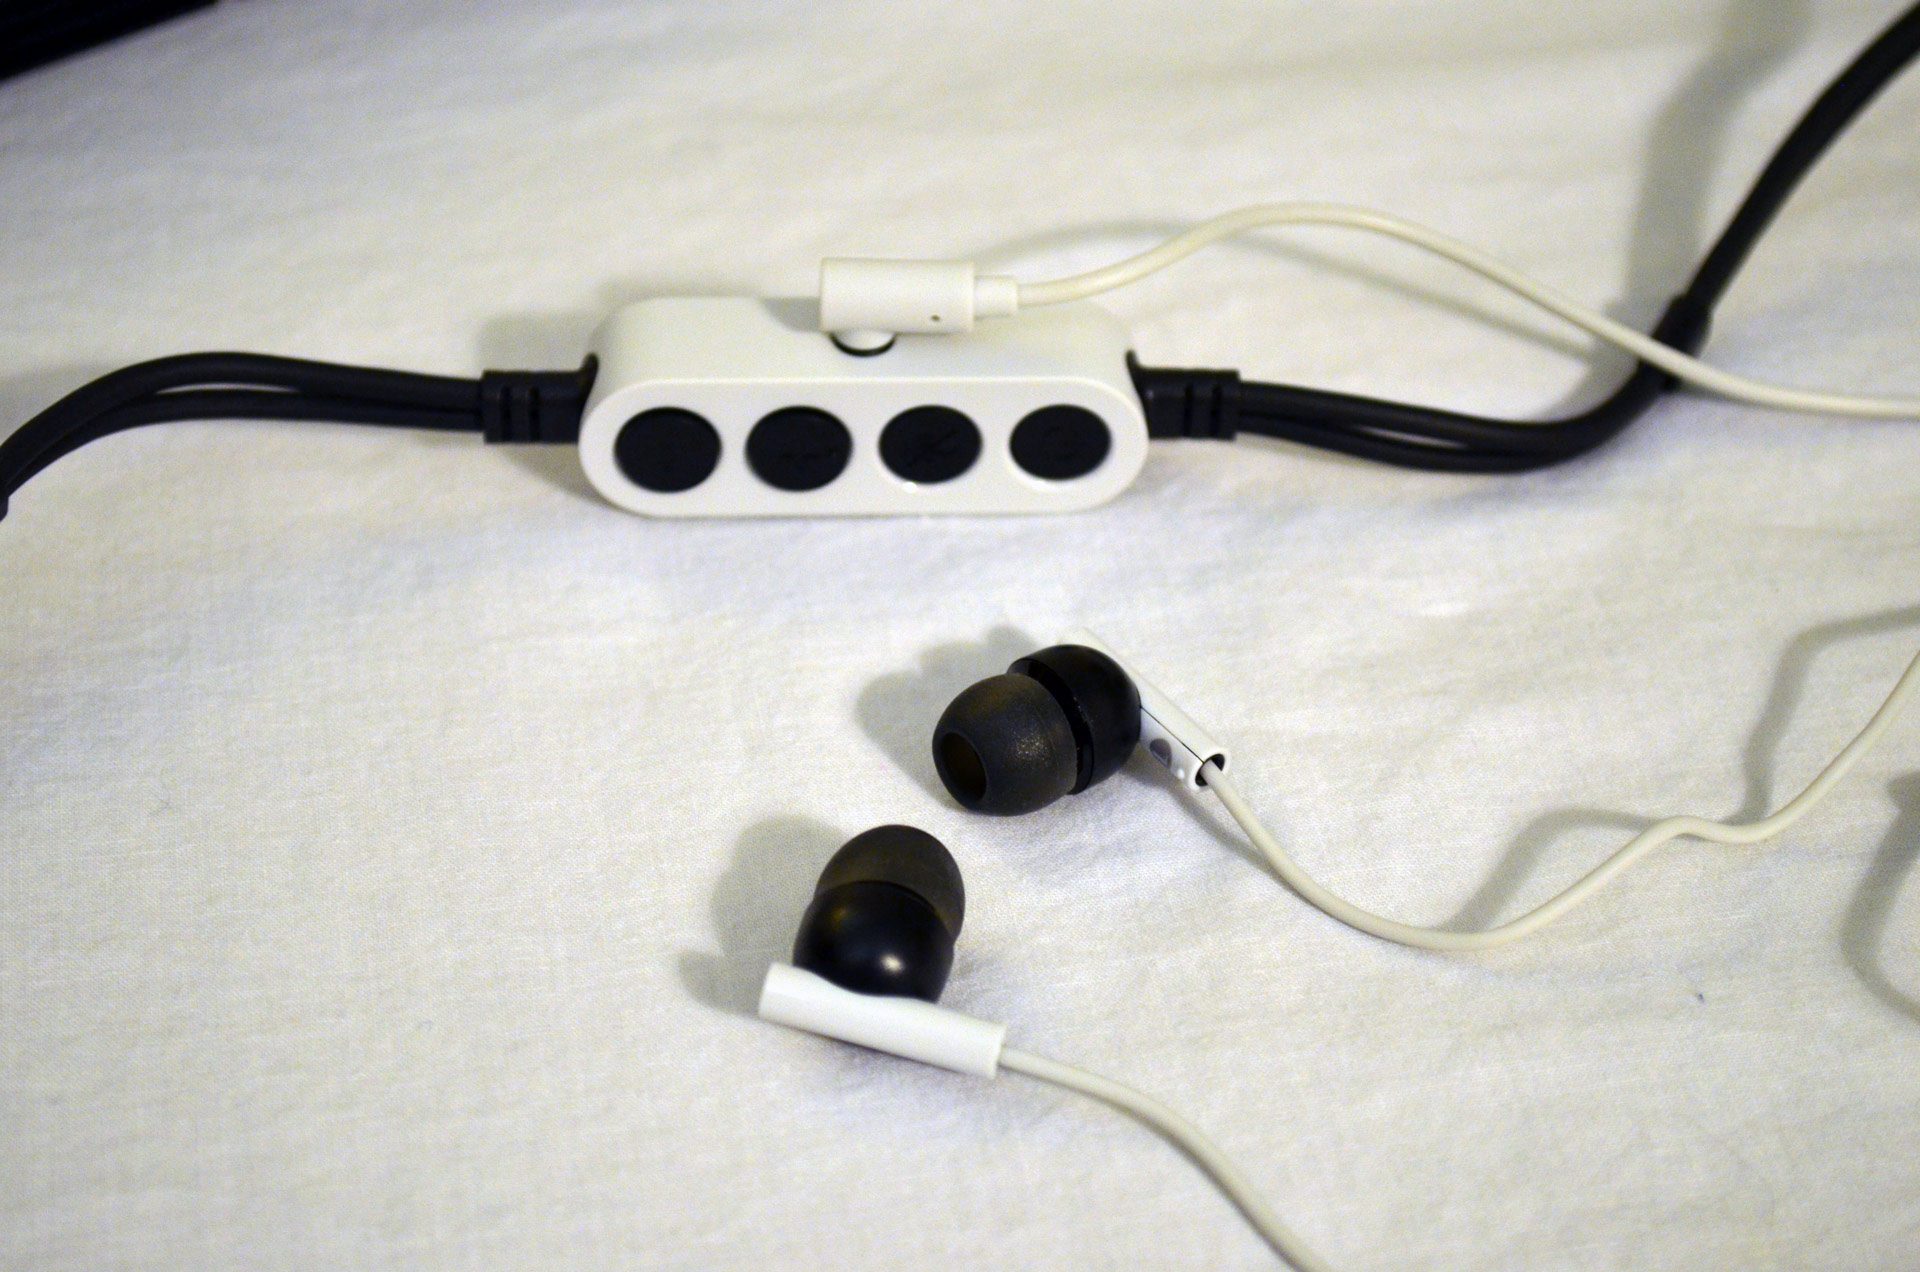 ps4 vr headset headphones